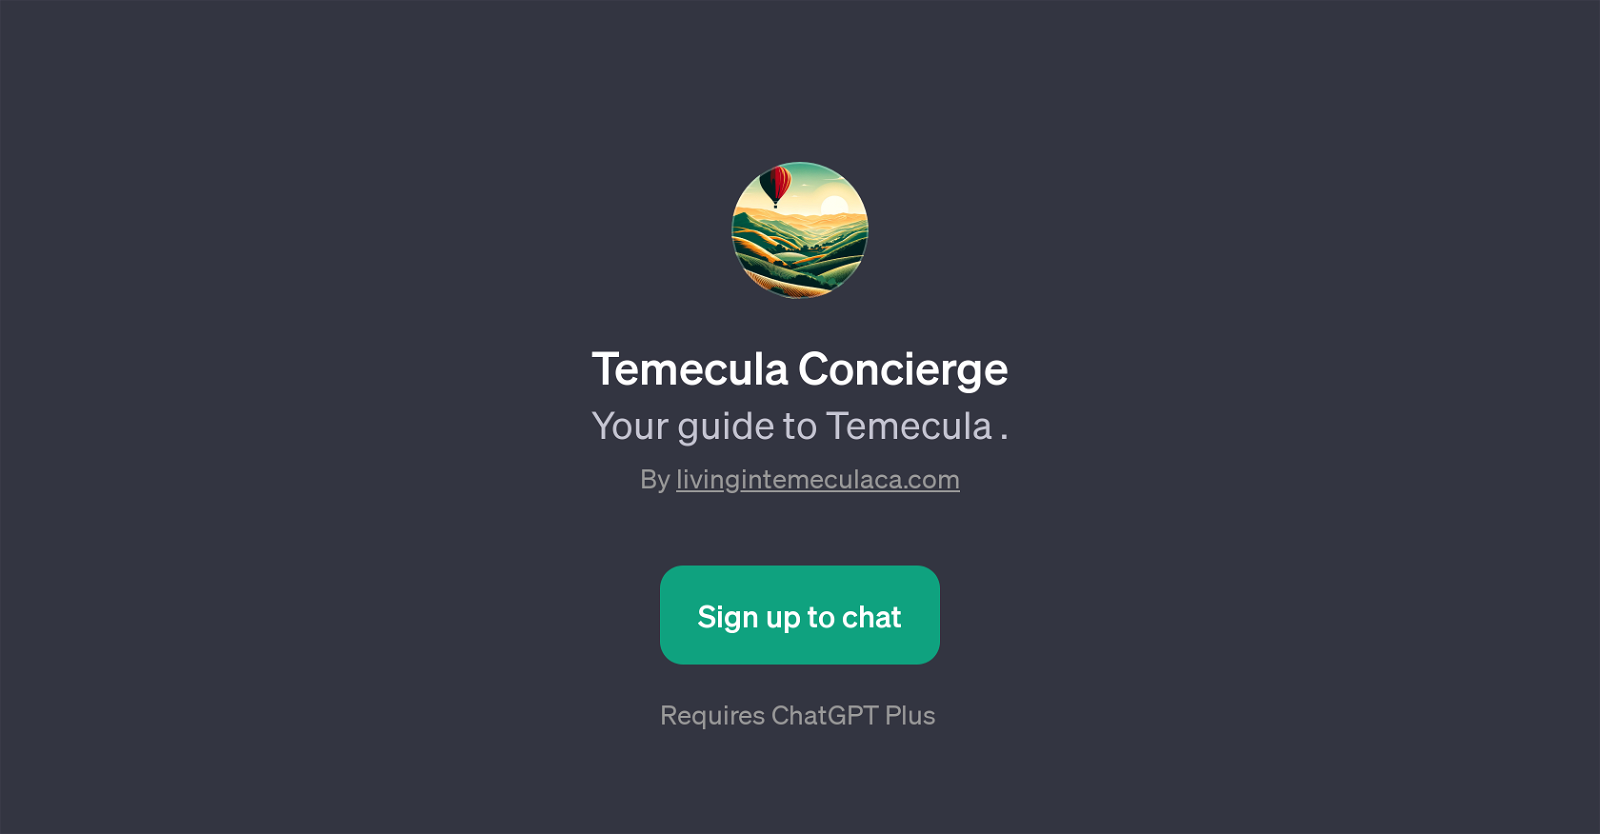 Temecula Concierge website